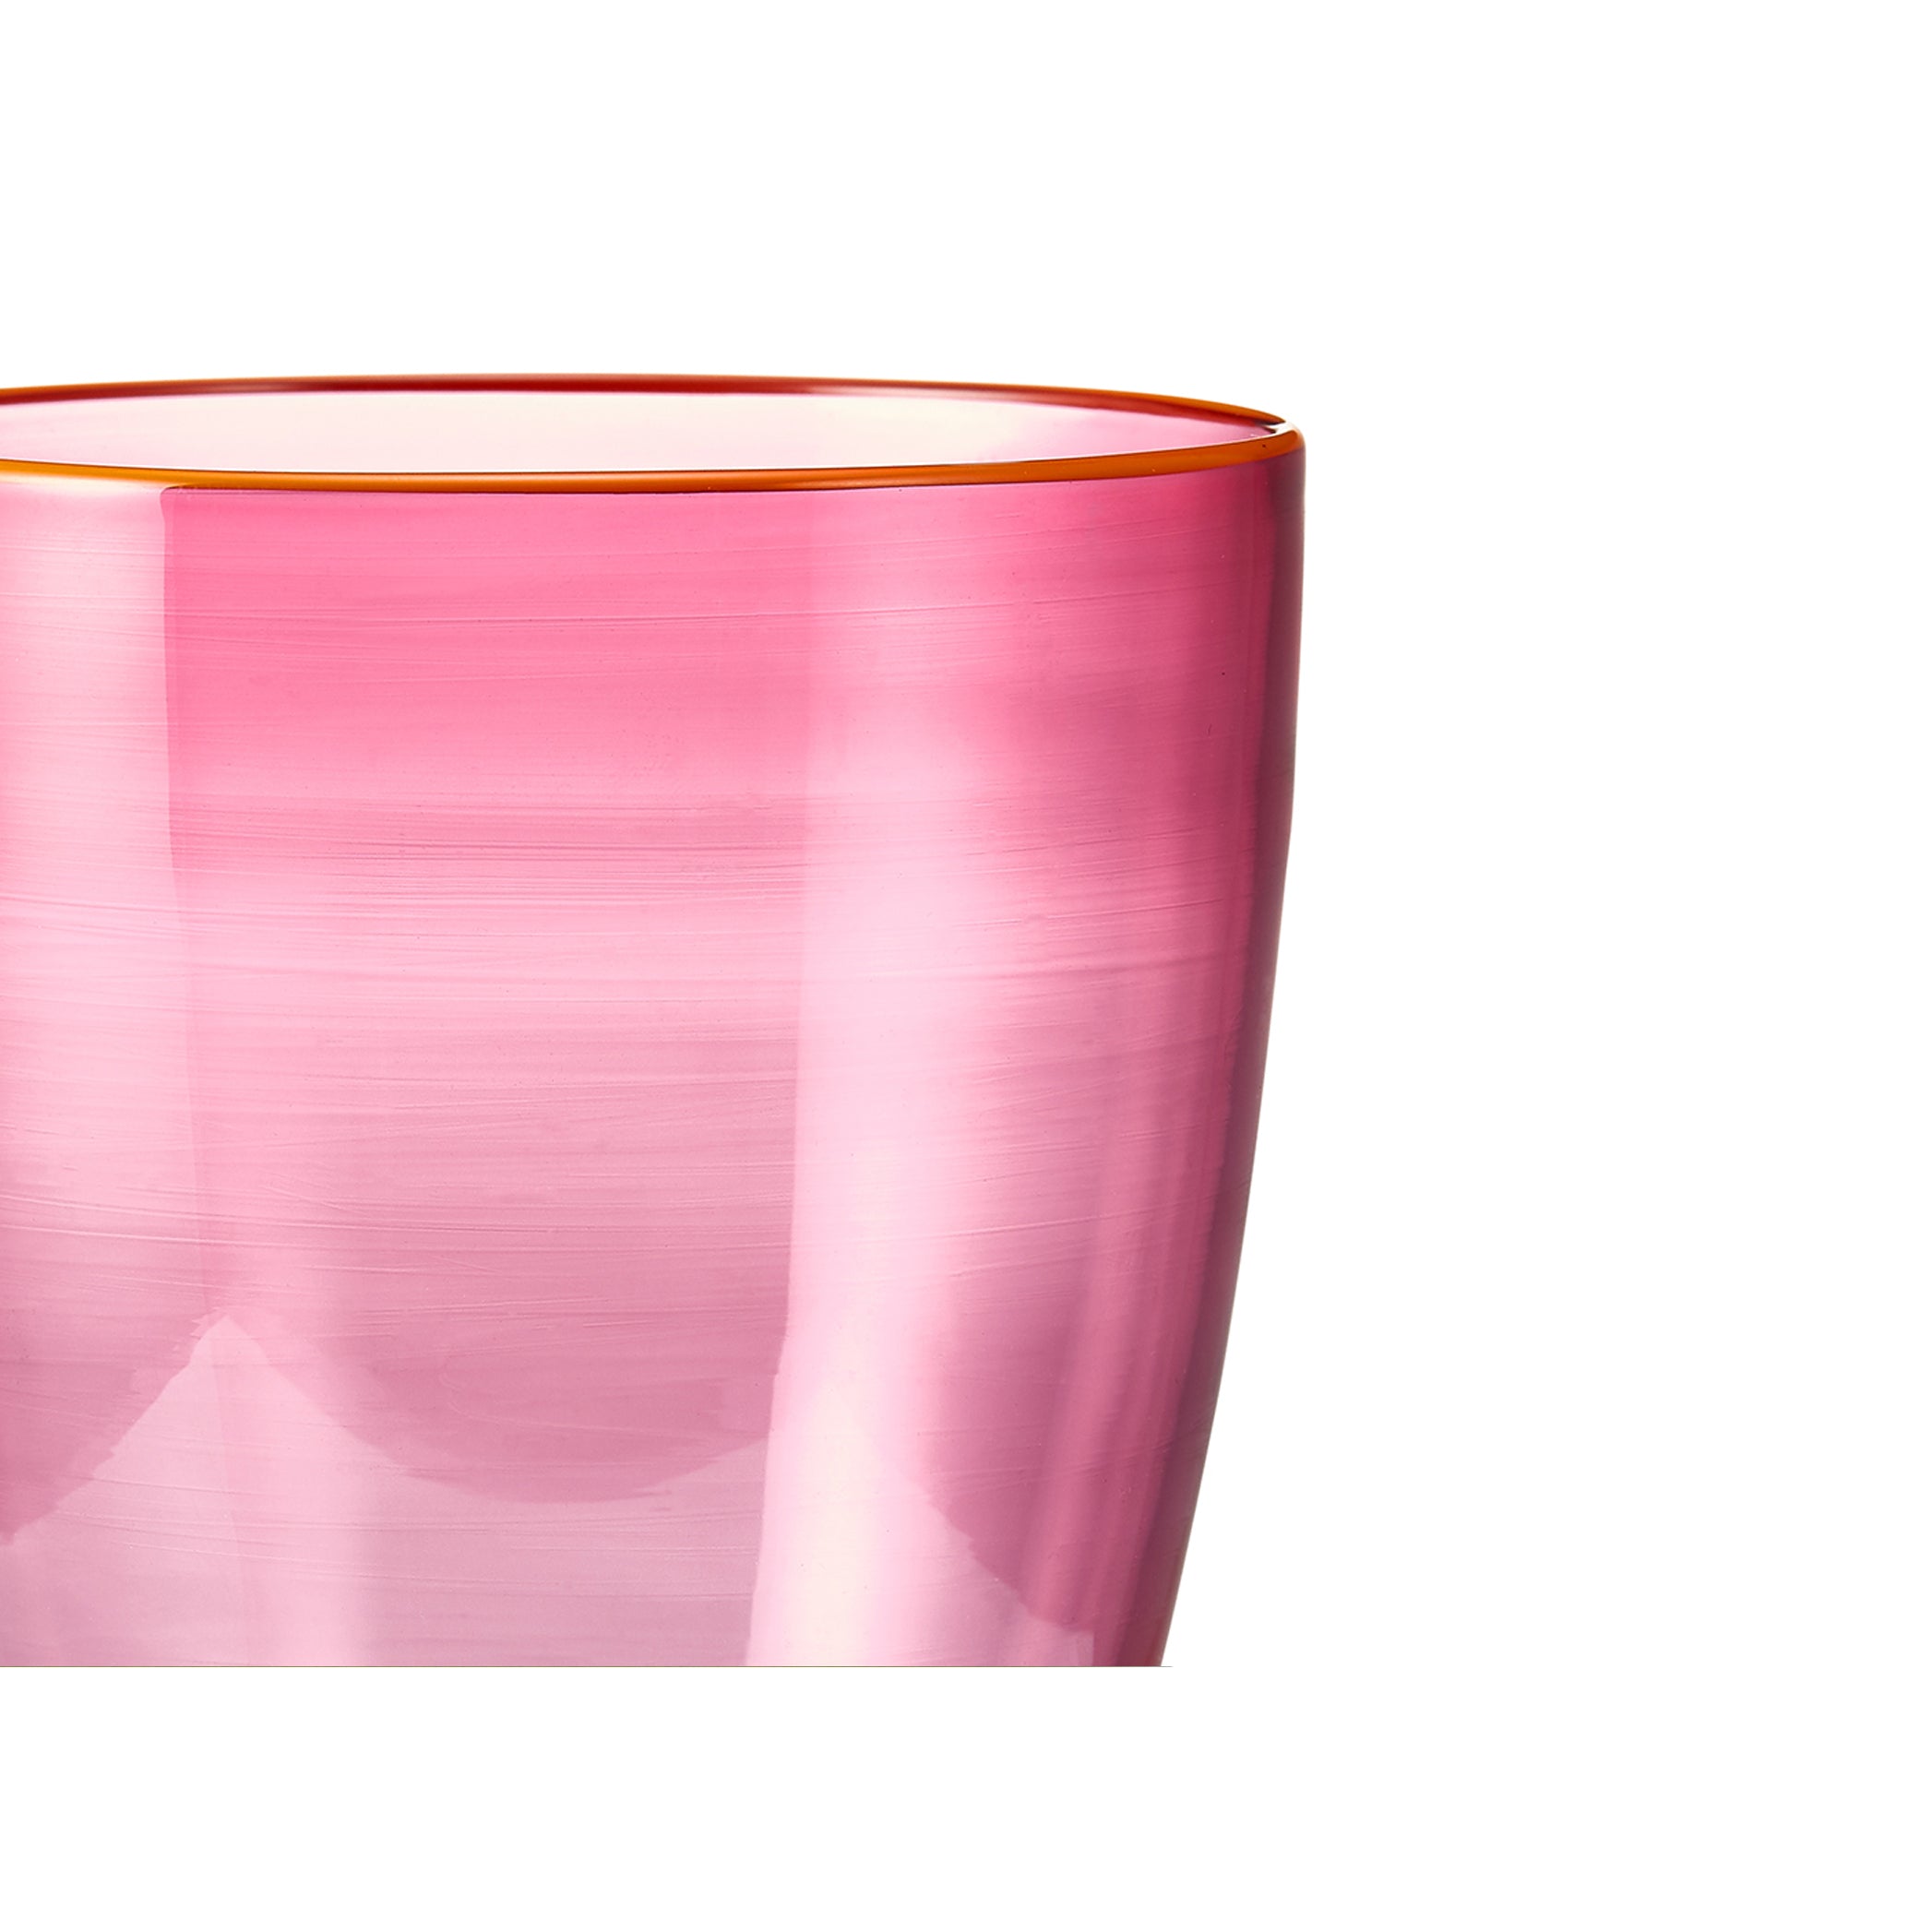 Handblown Bumba Glass in Fuchsia Pink with Orange Rim, 30cl